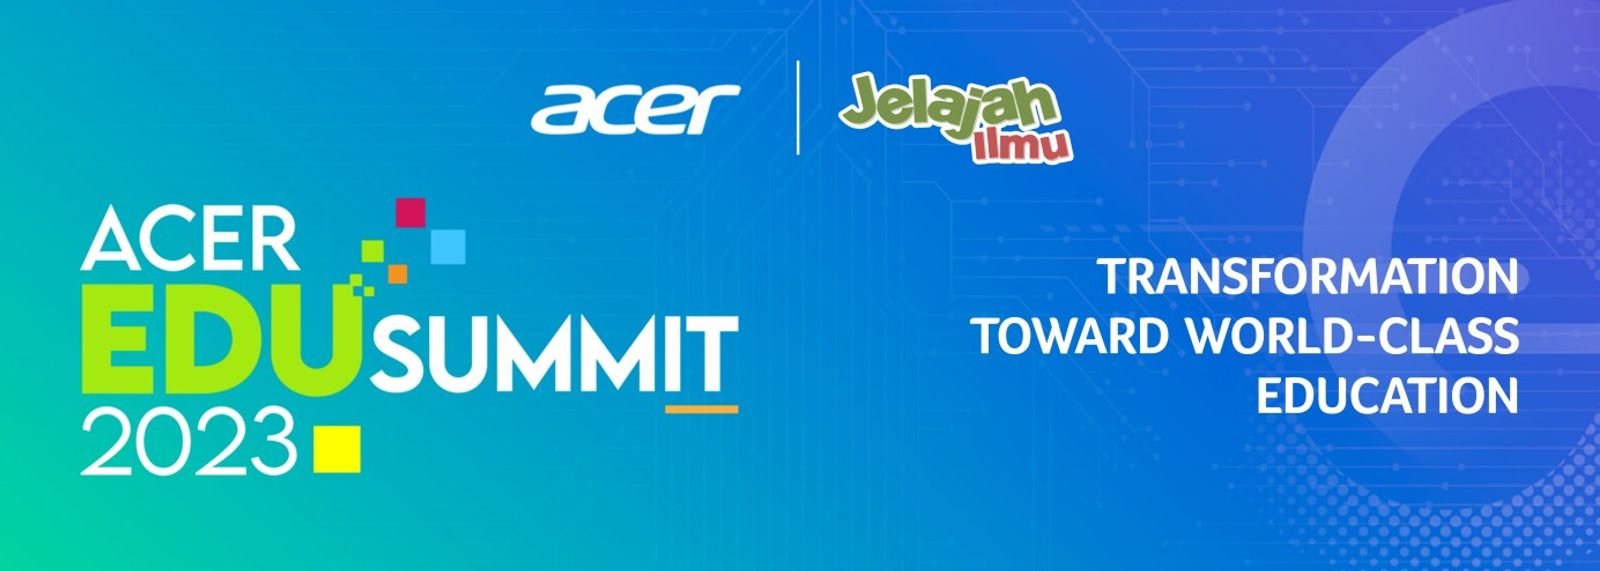 mySecondTeacher’s “Jelajah Ilmu” served as digital platform partner at Acer Indonesia Education Summit 2023